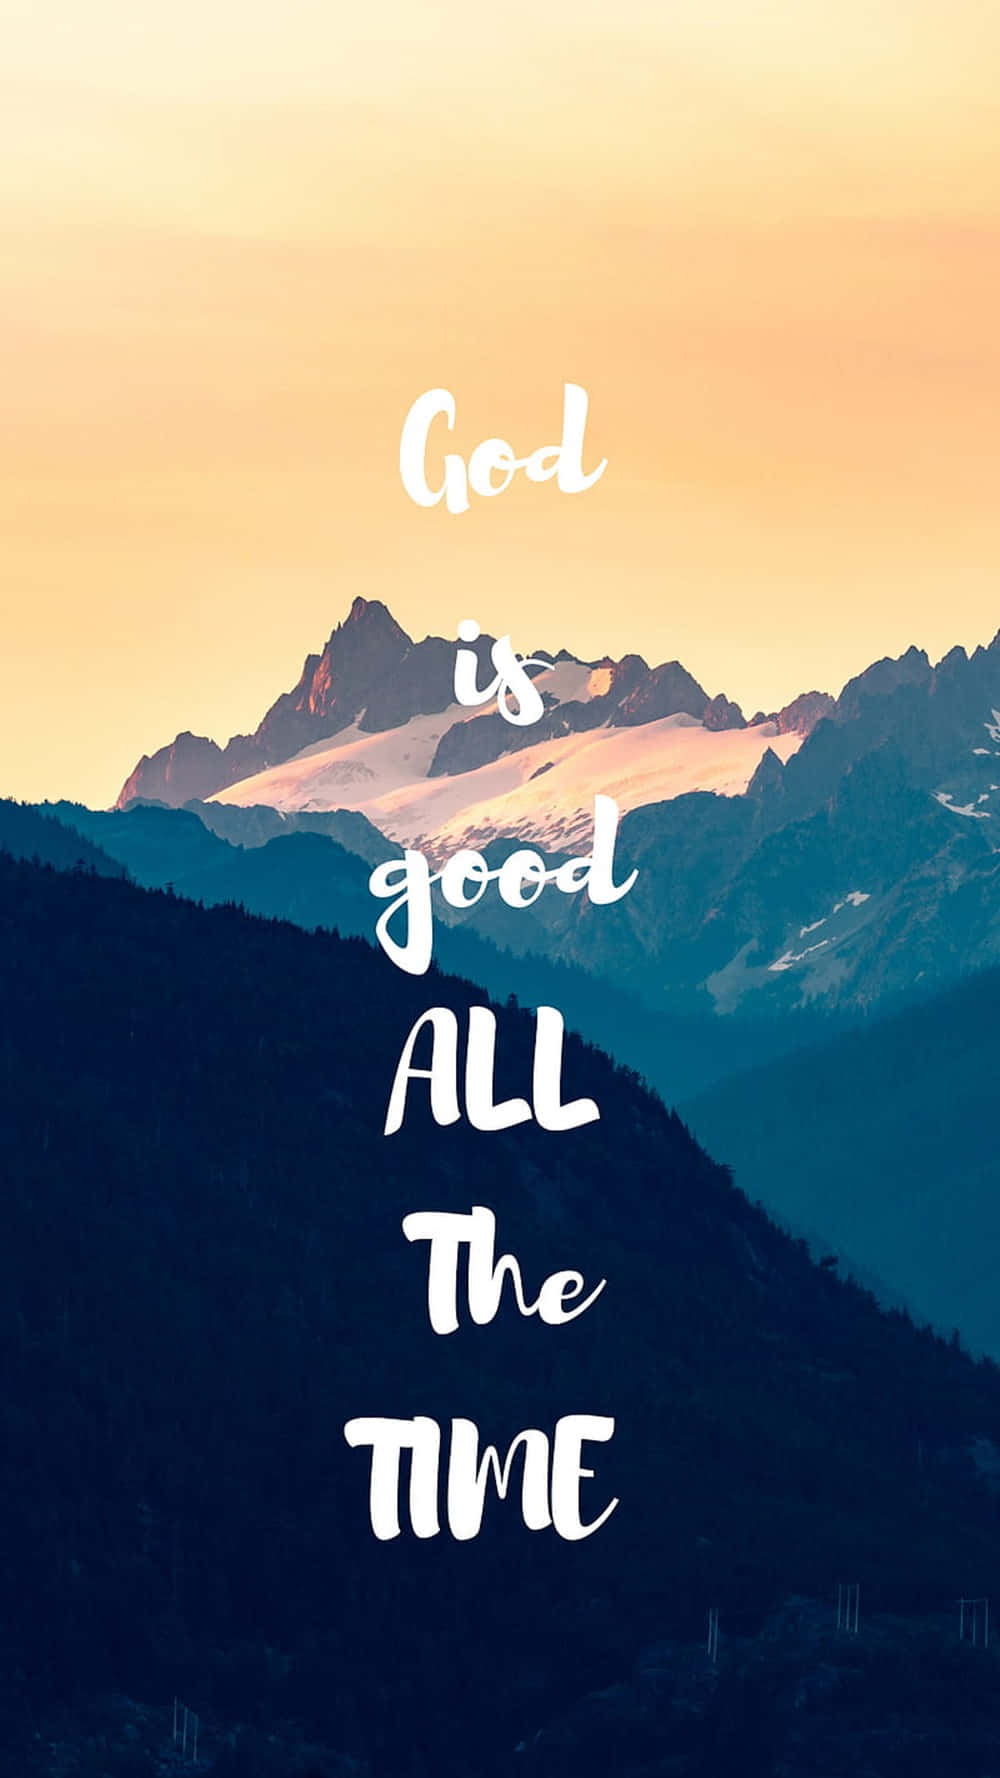 God is Good Wallpaper